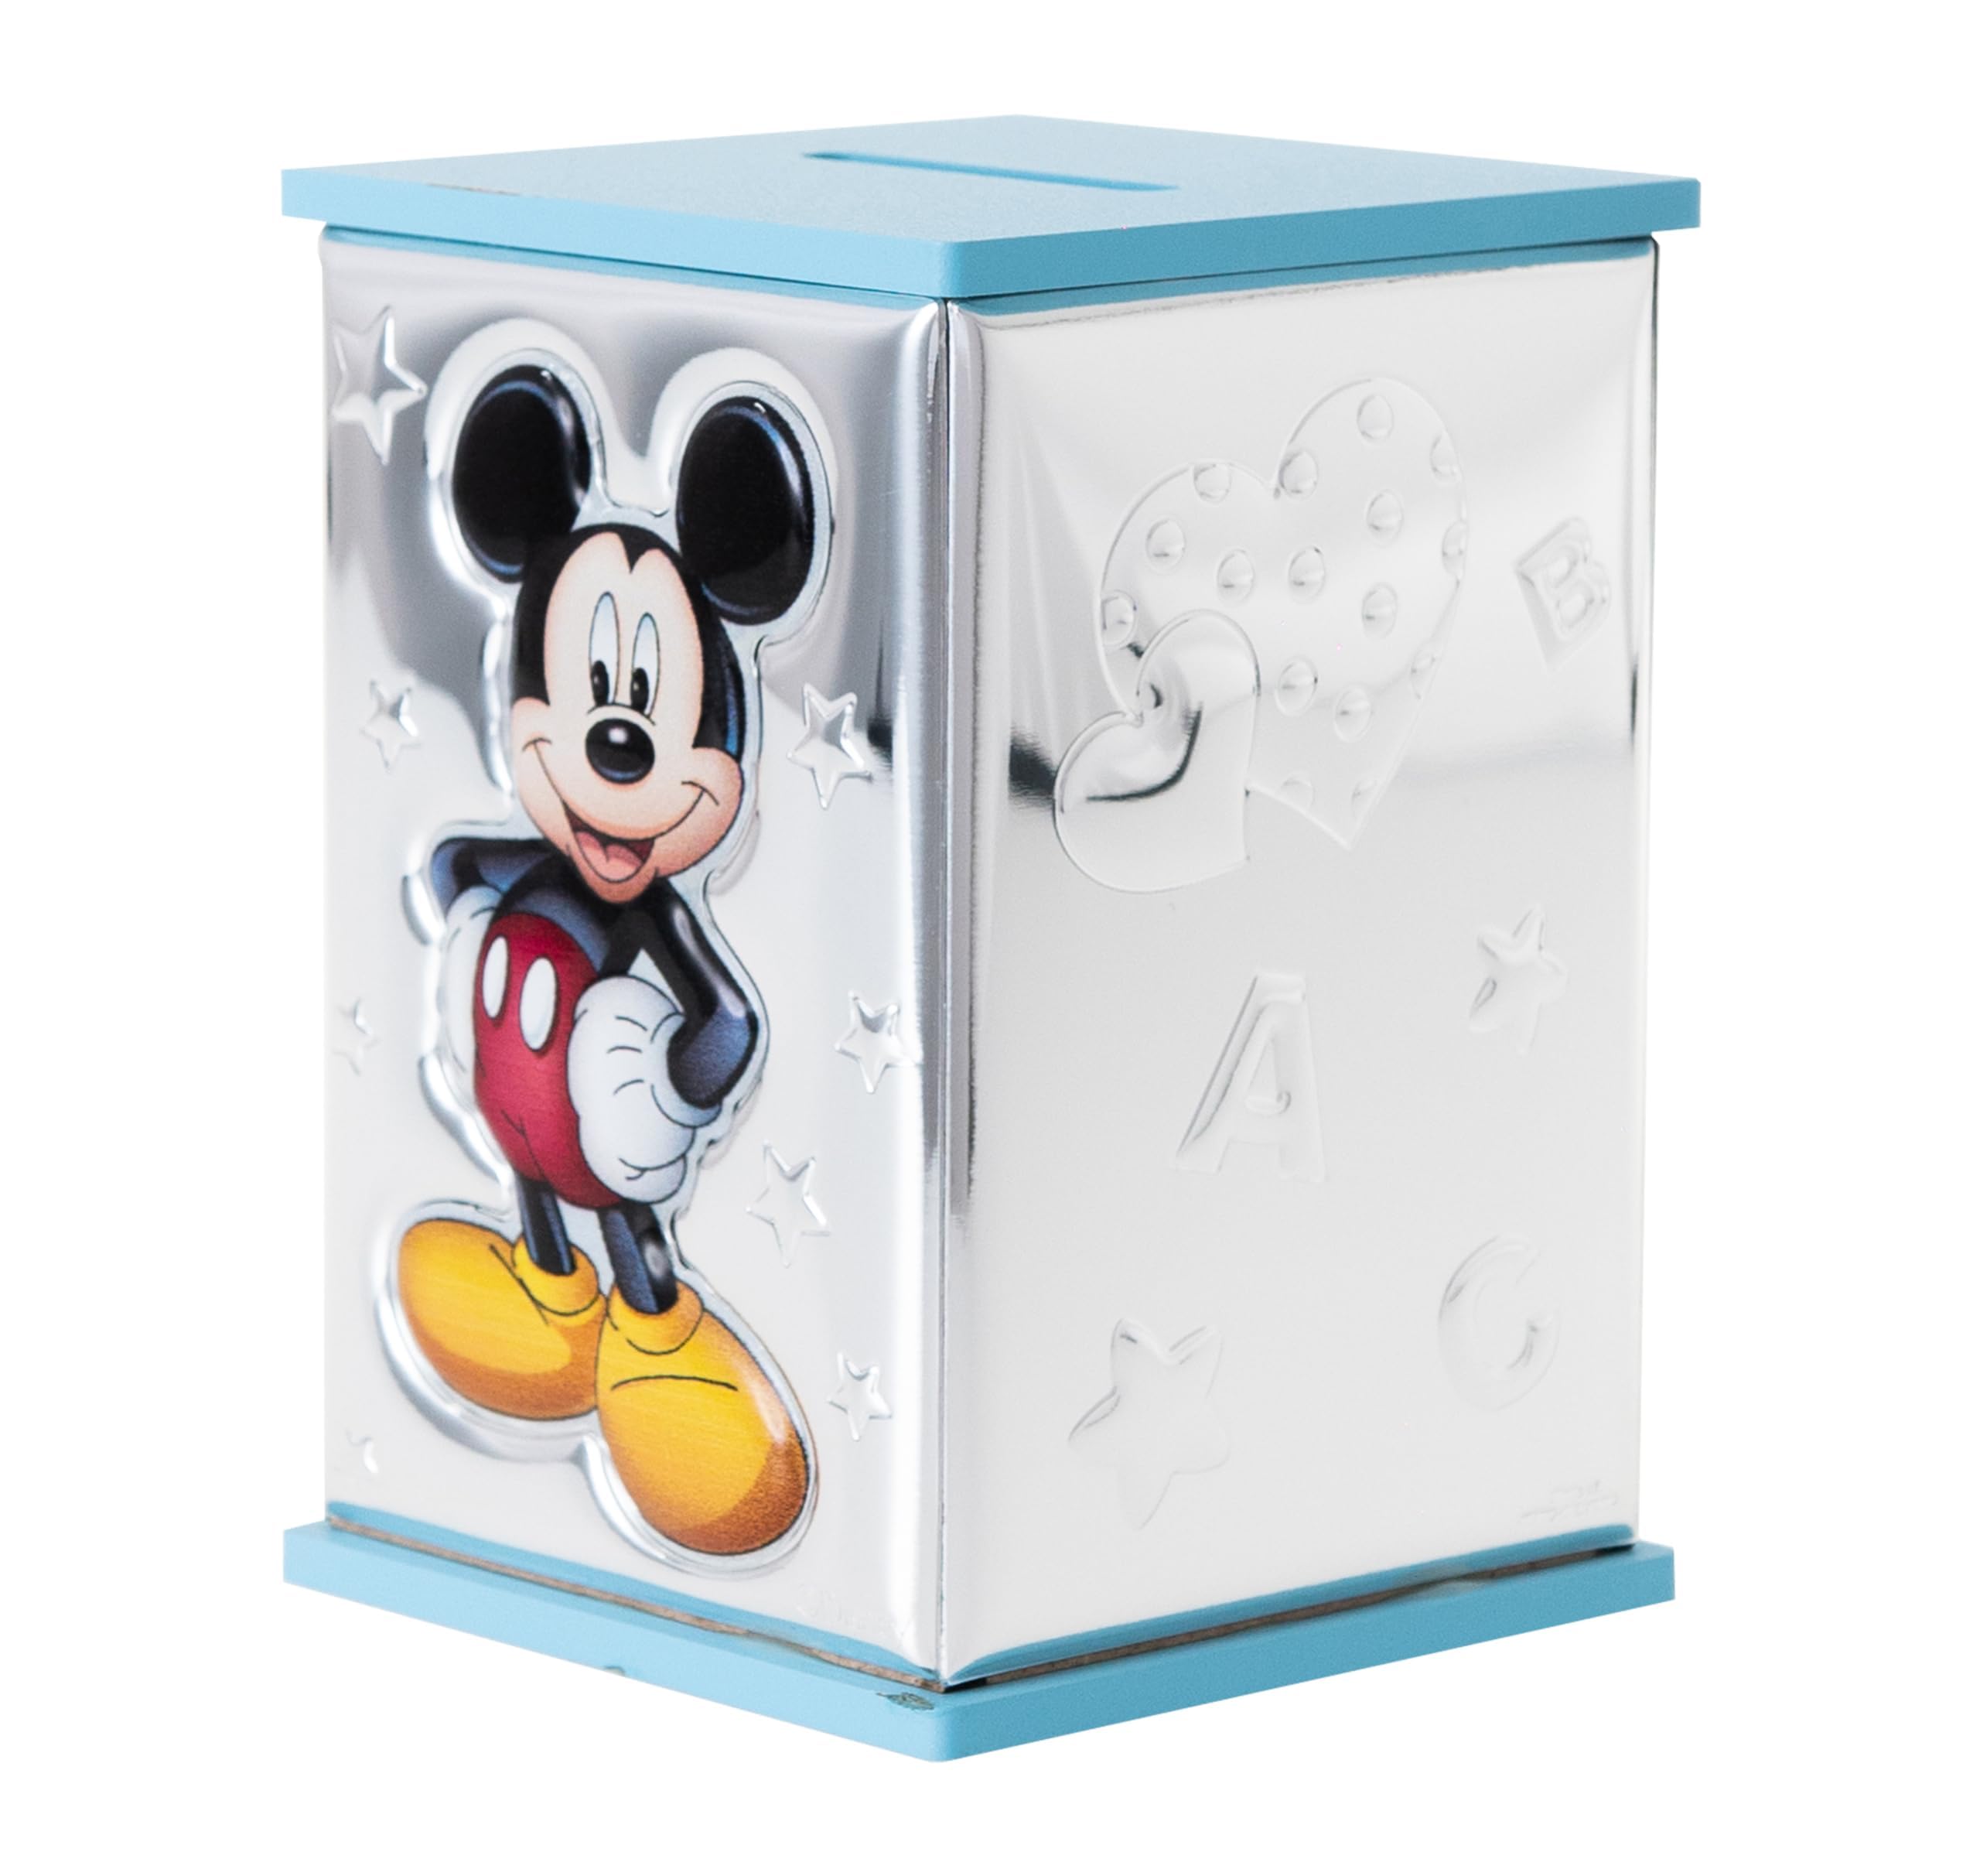 Disney Baby - Valenti&Co. - Spardose aus Miro® Silver aus der Disney-Kollektion mit Mickey-Mouse-Motiv